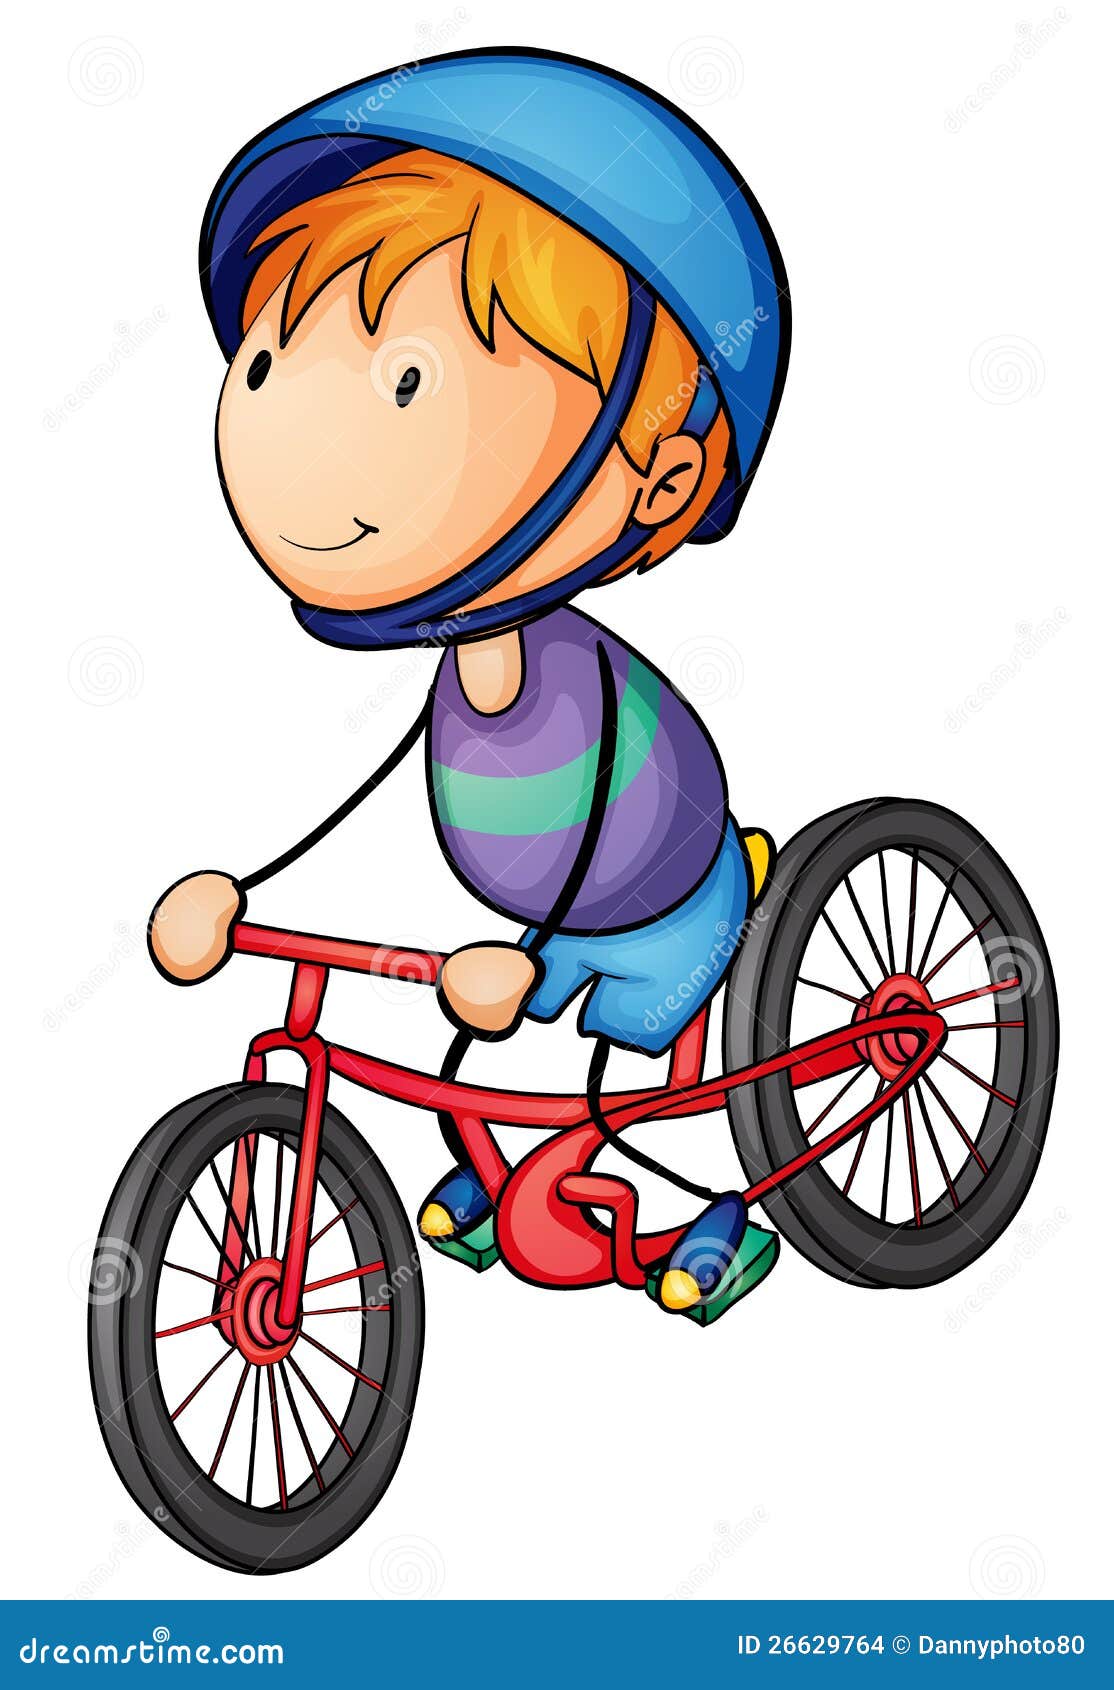 boy riding bike clipart - photo #9